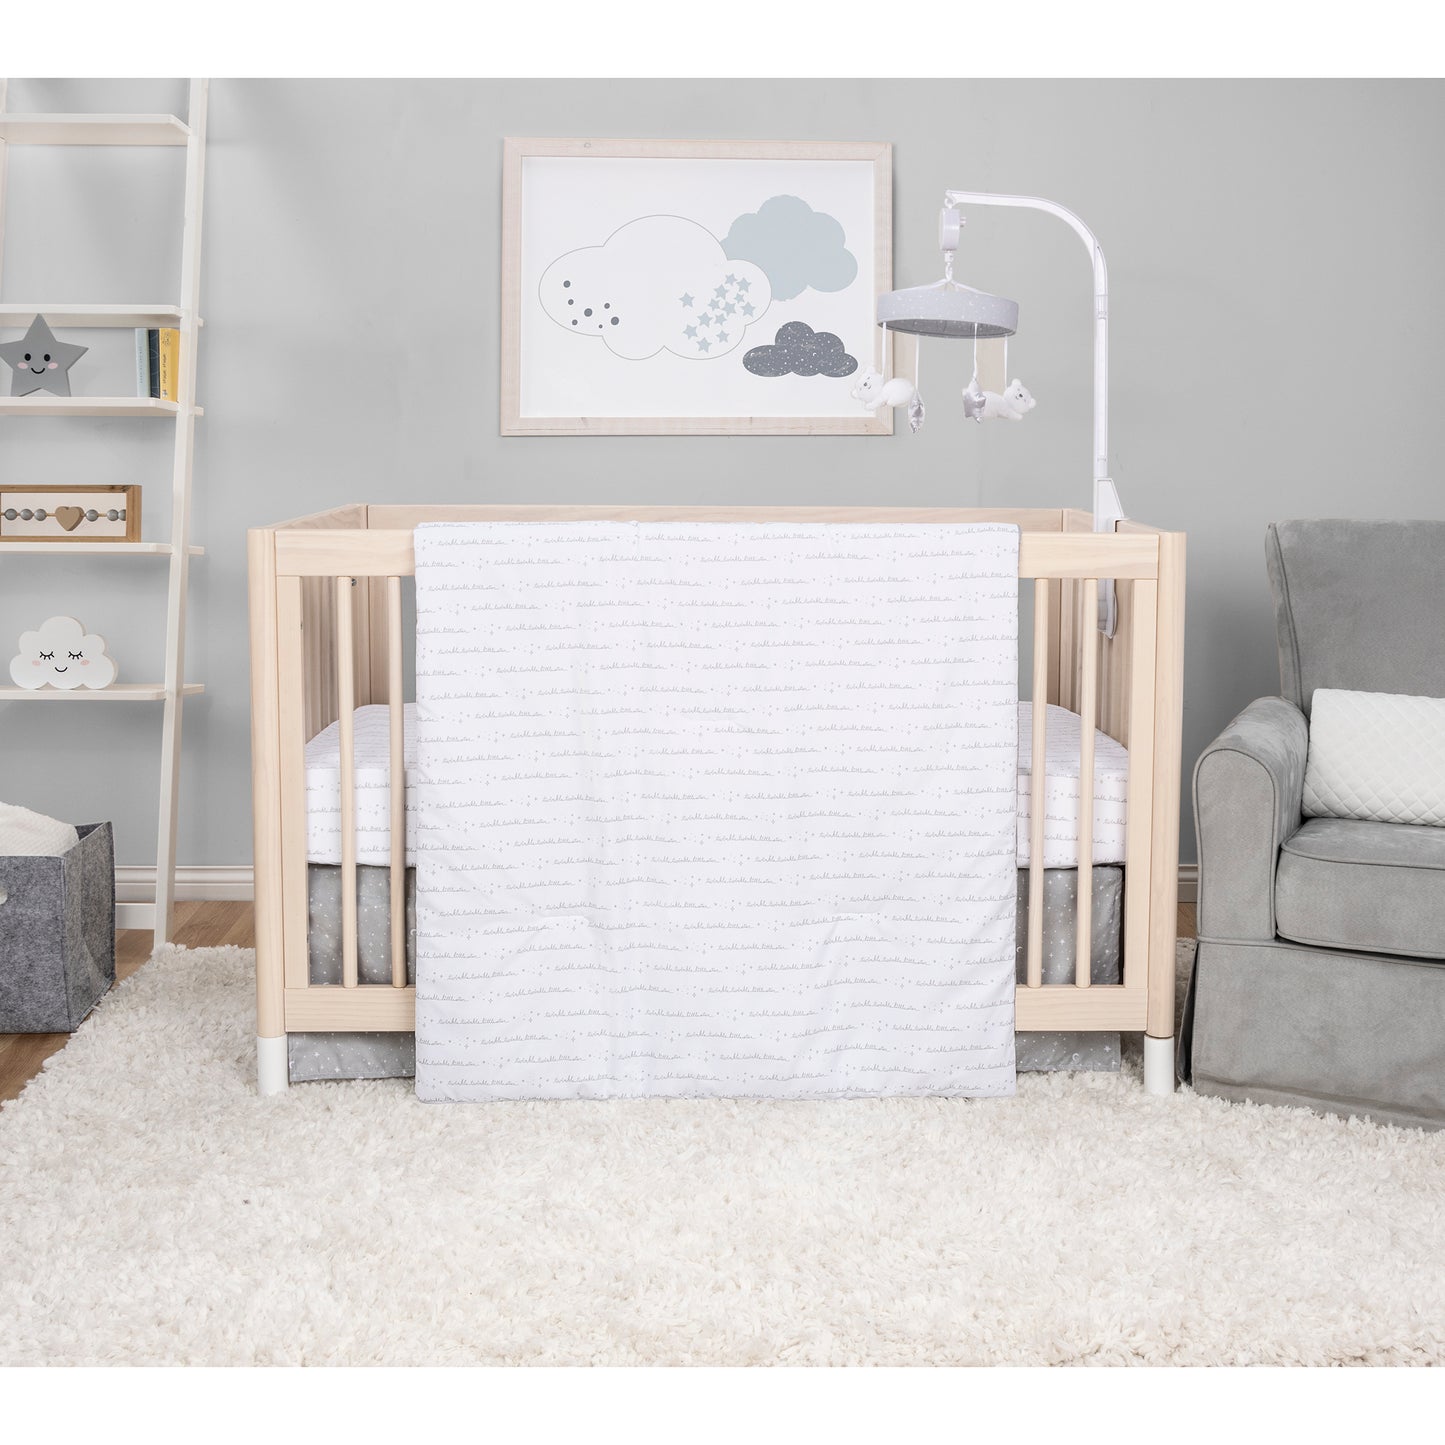 Twinkle Stars 3 Piece Crib Bedding Set by Sammy & Lou® - Stylized in a bedroom